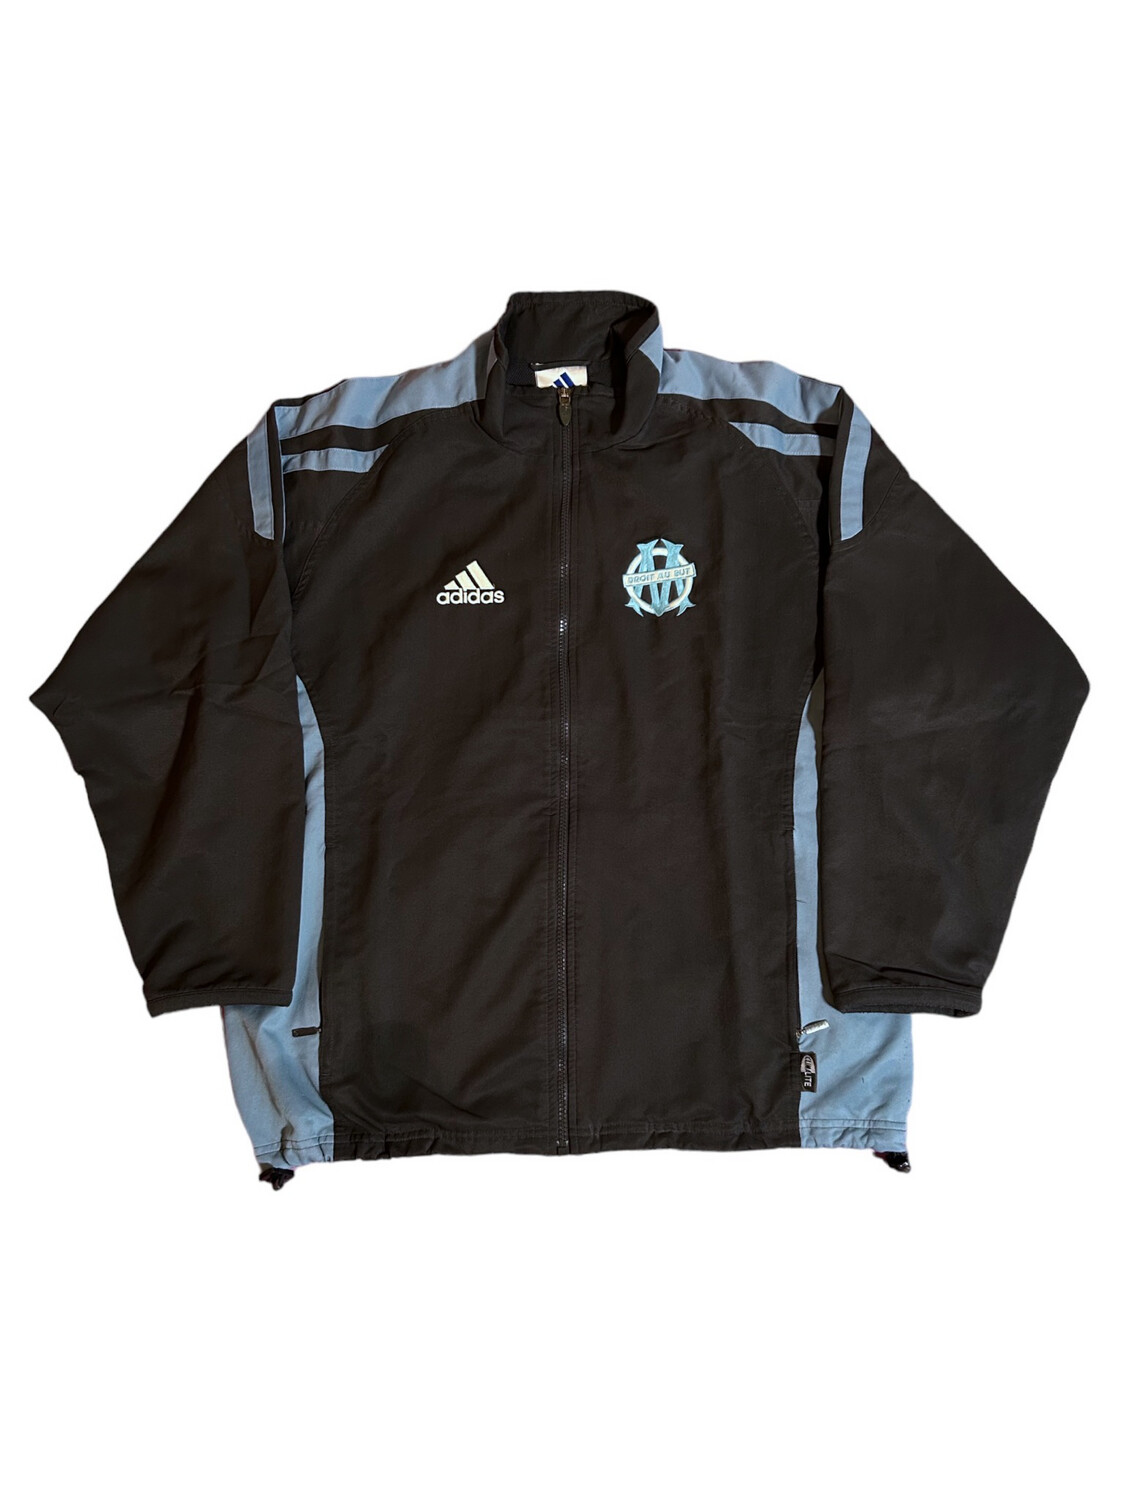 Olympique de Marseille 2001/02 Training Jacket - S